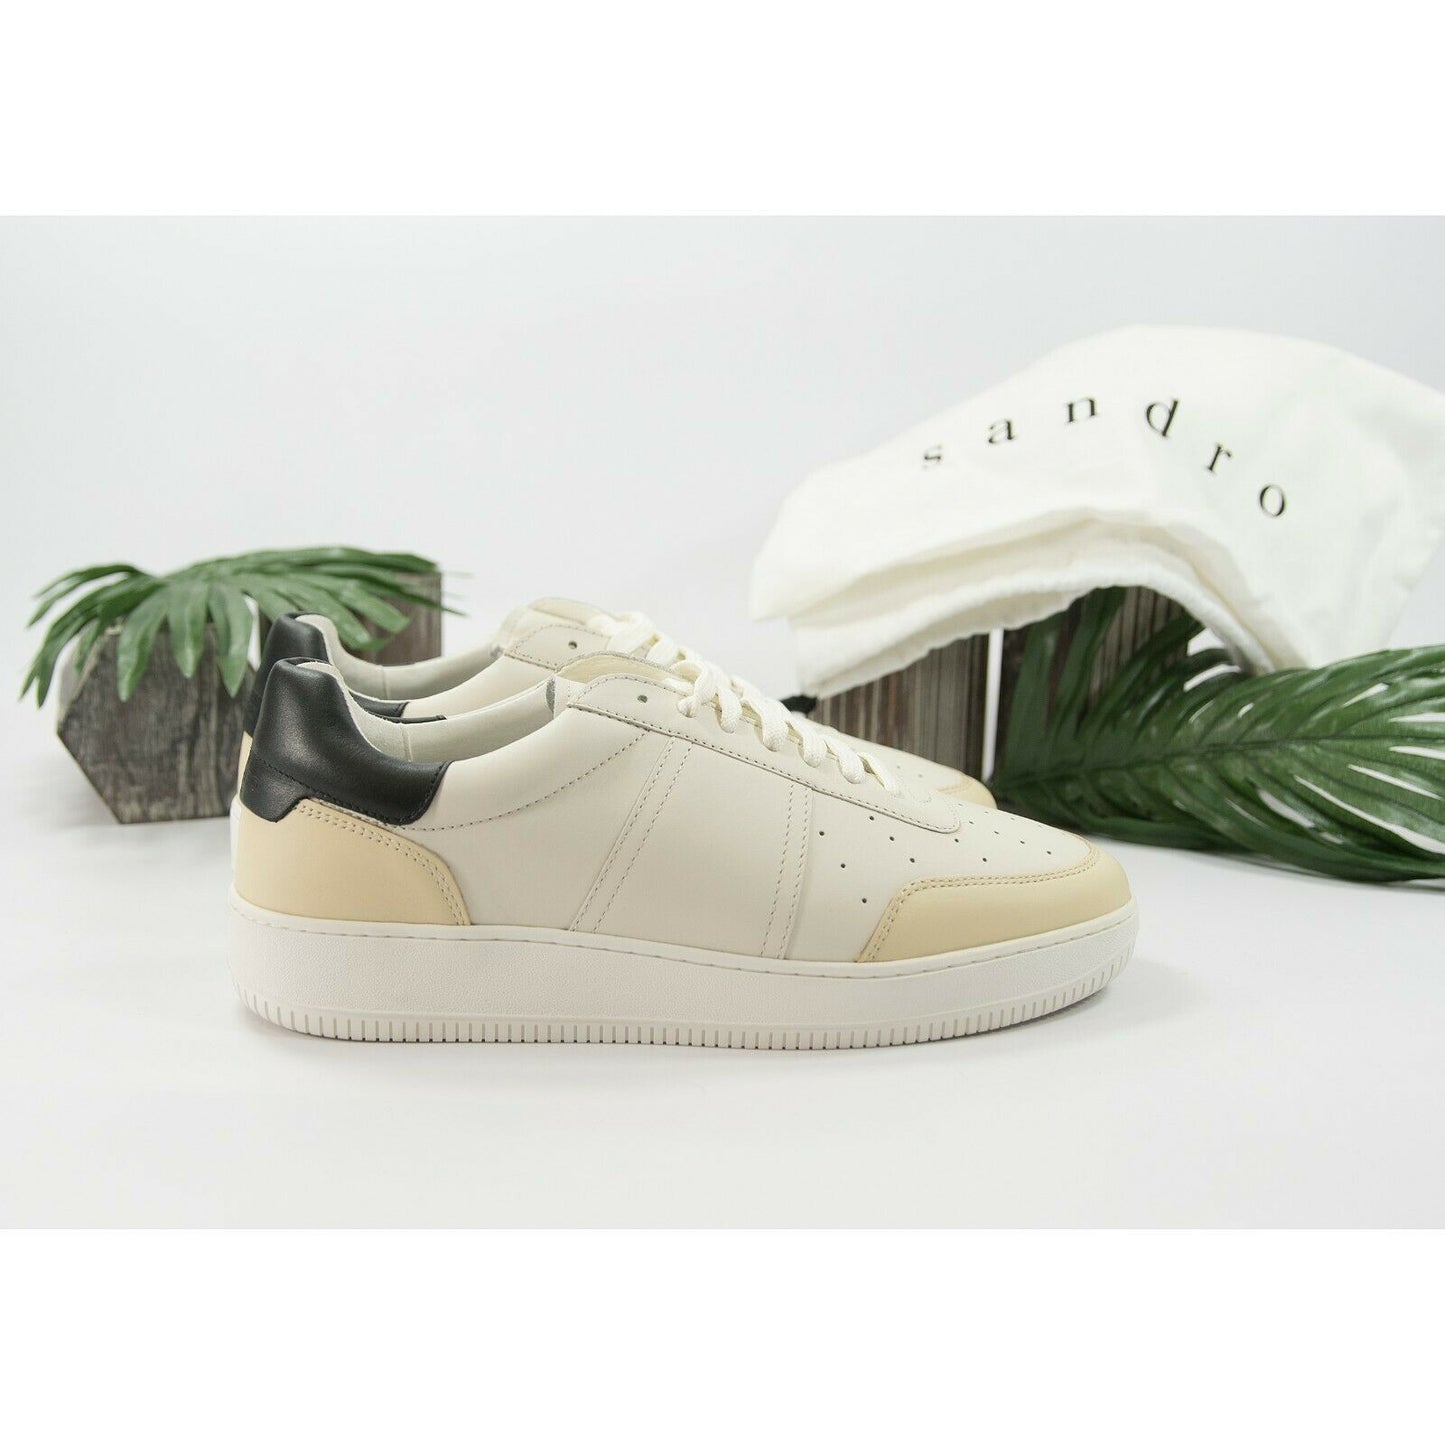 Sandro Unisex H17 Miran Cream Black Leather Sneaker Shoes Size 37 US 7